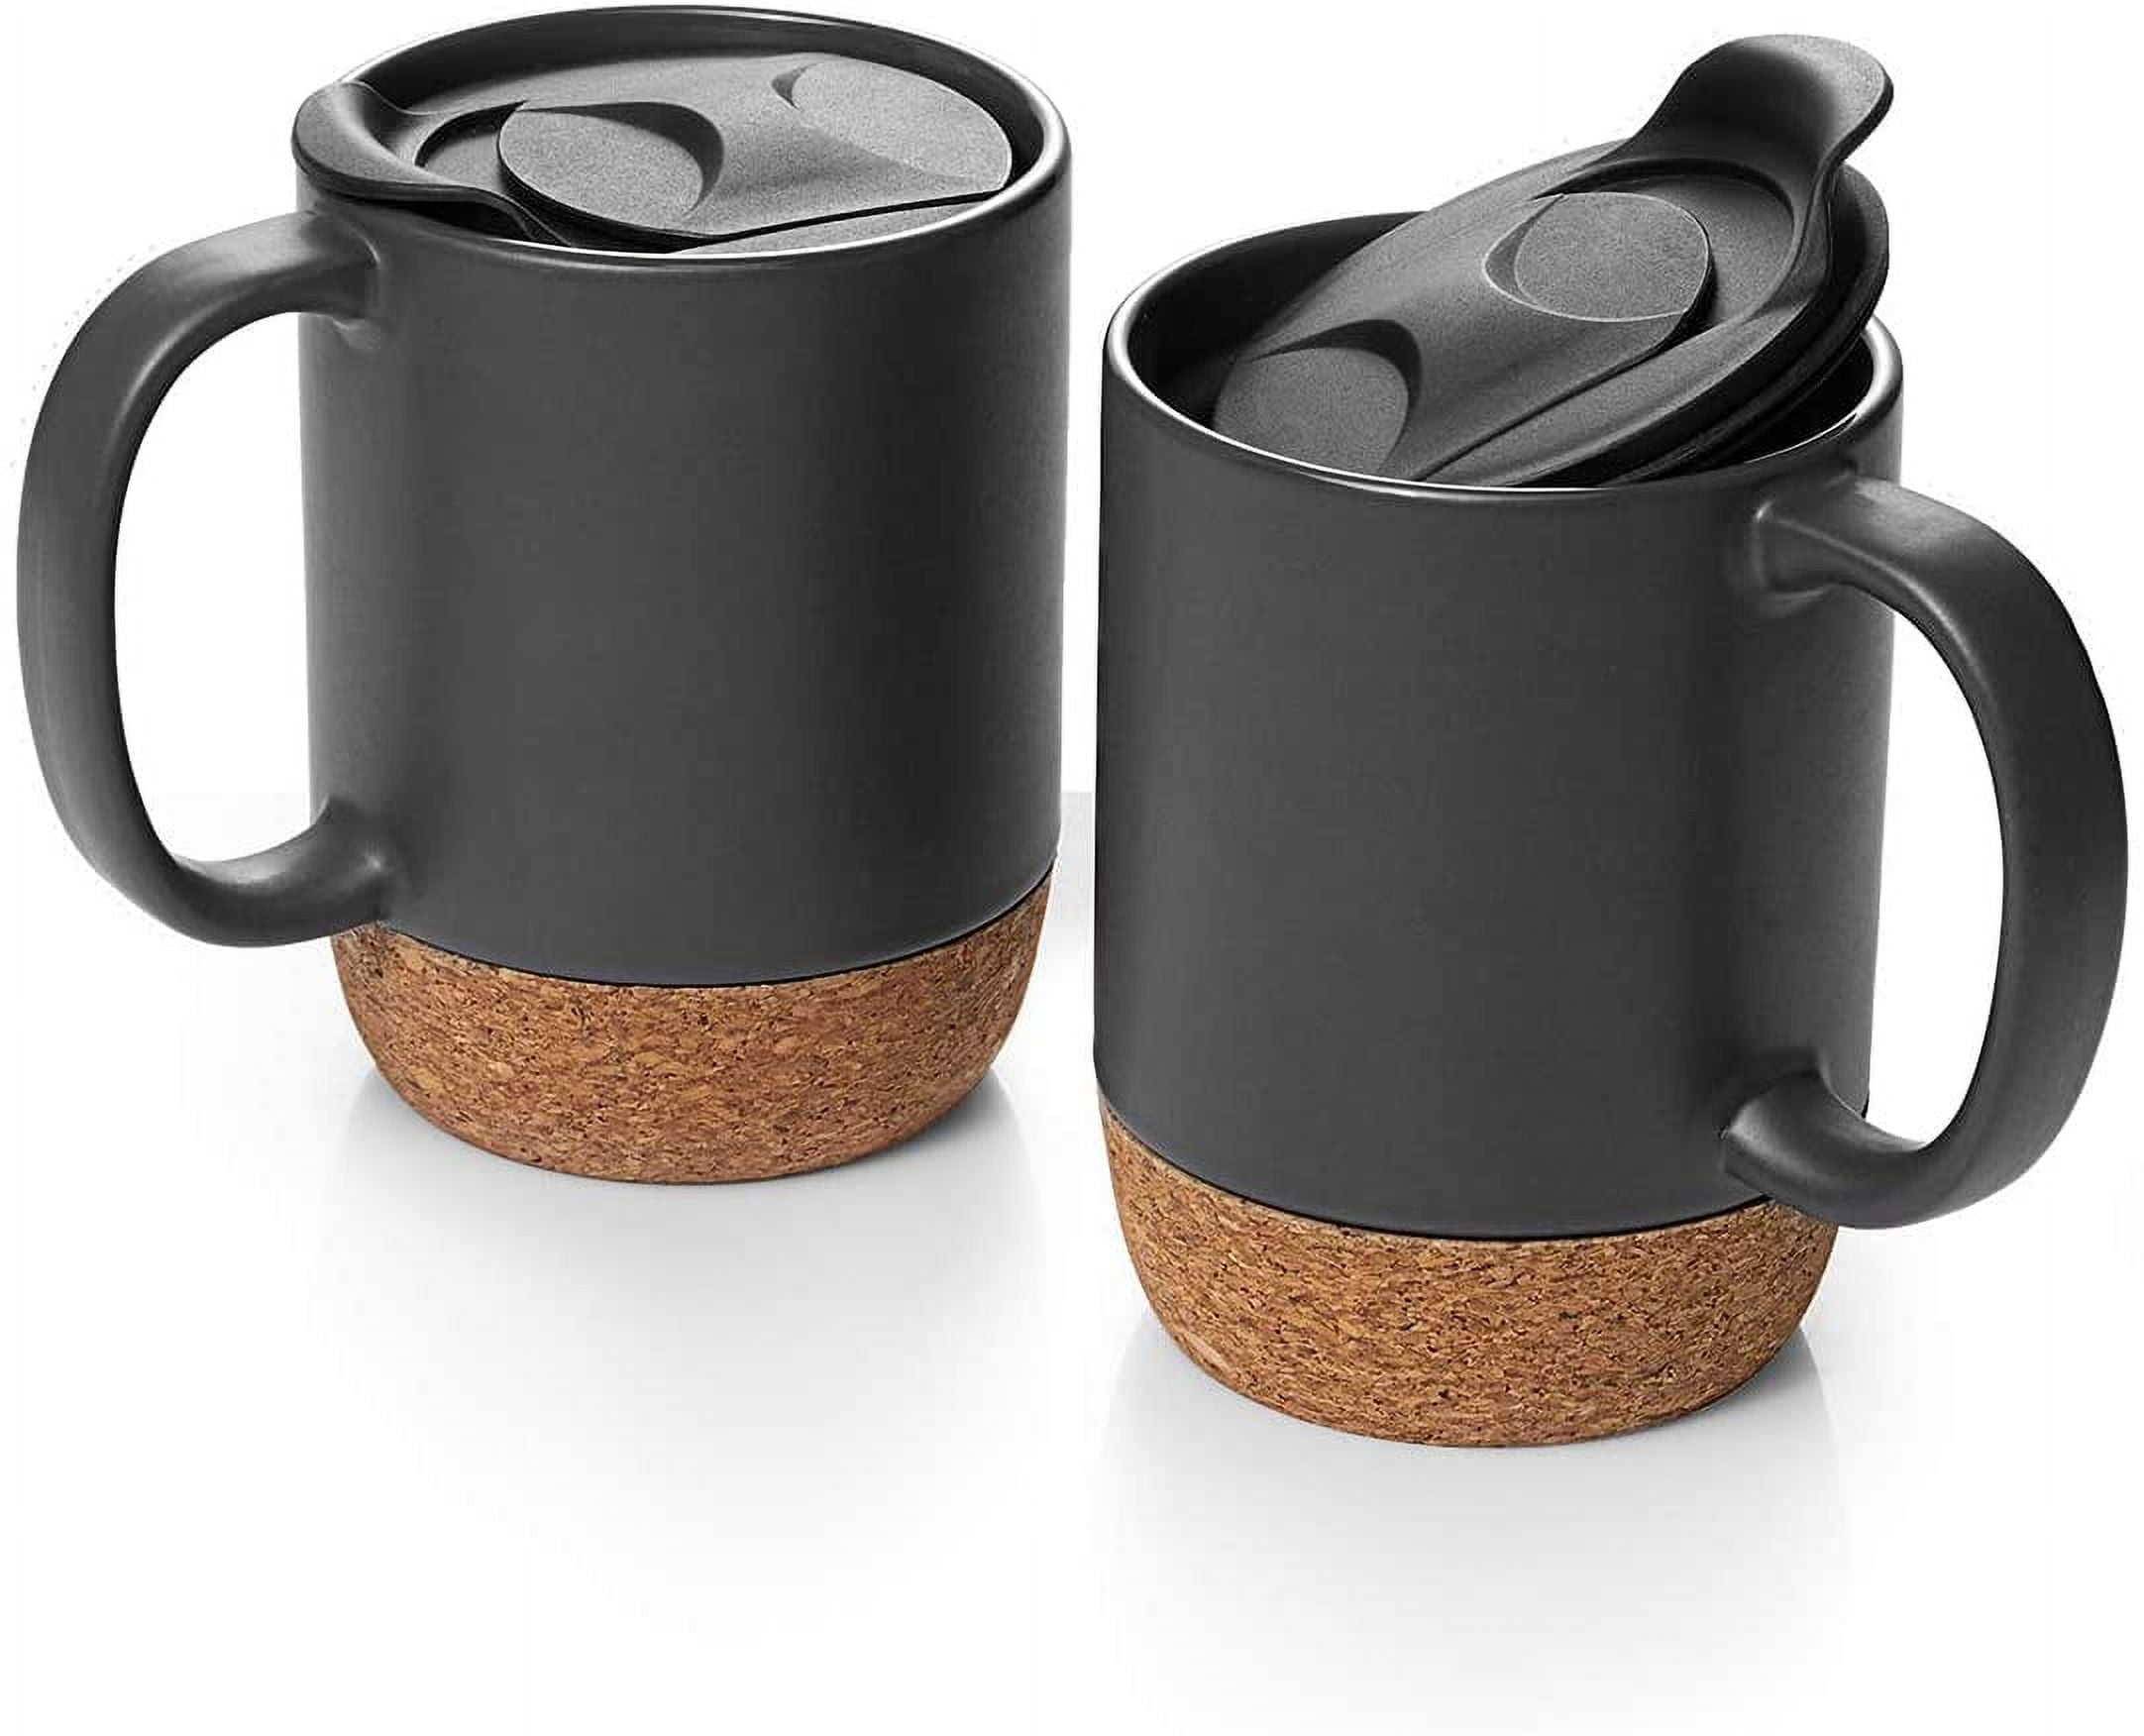 LocknLock Set of 2 Insulated Mugs with Handles 